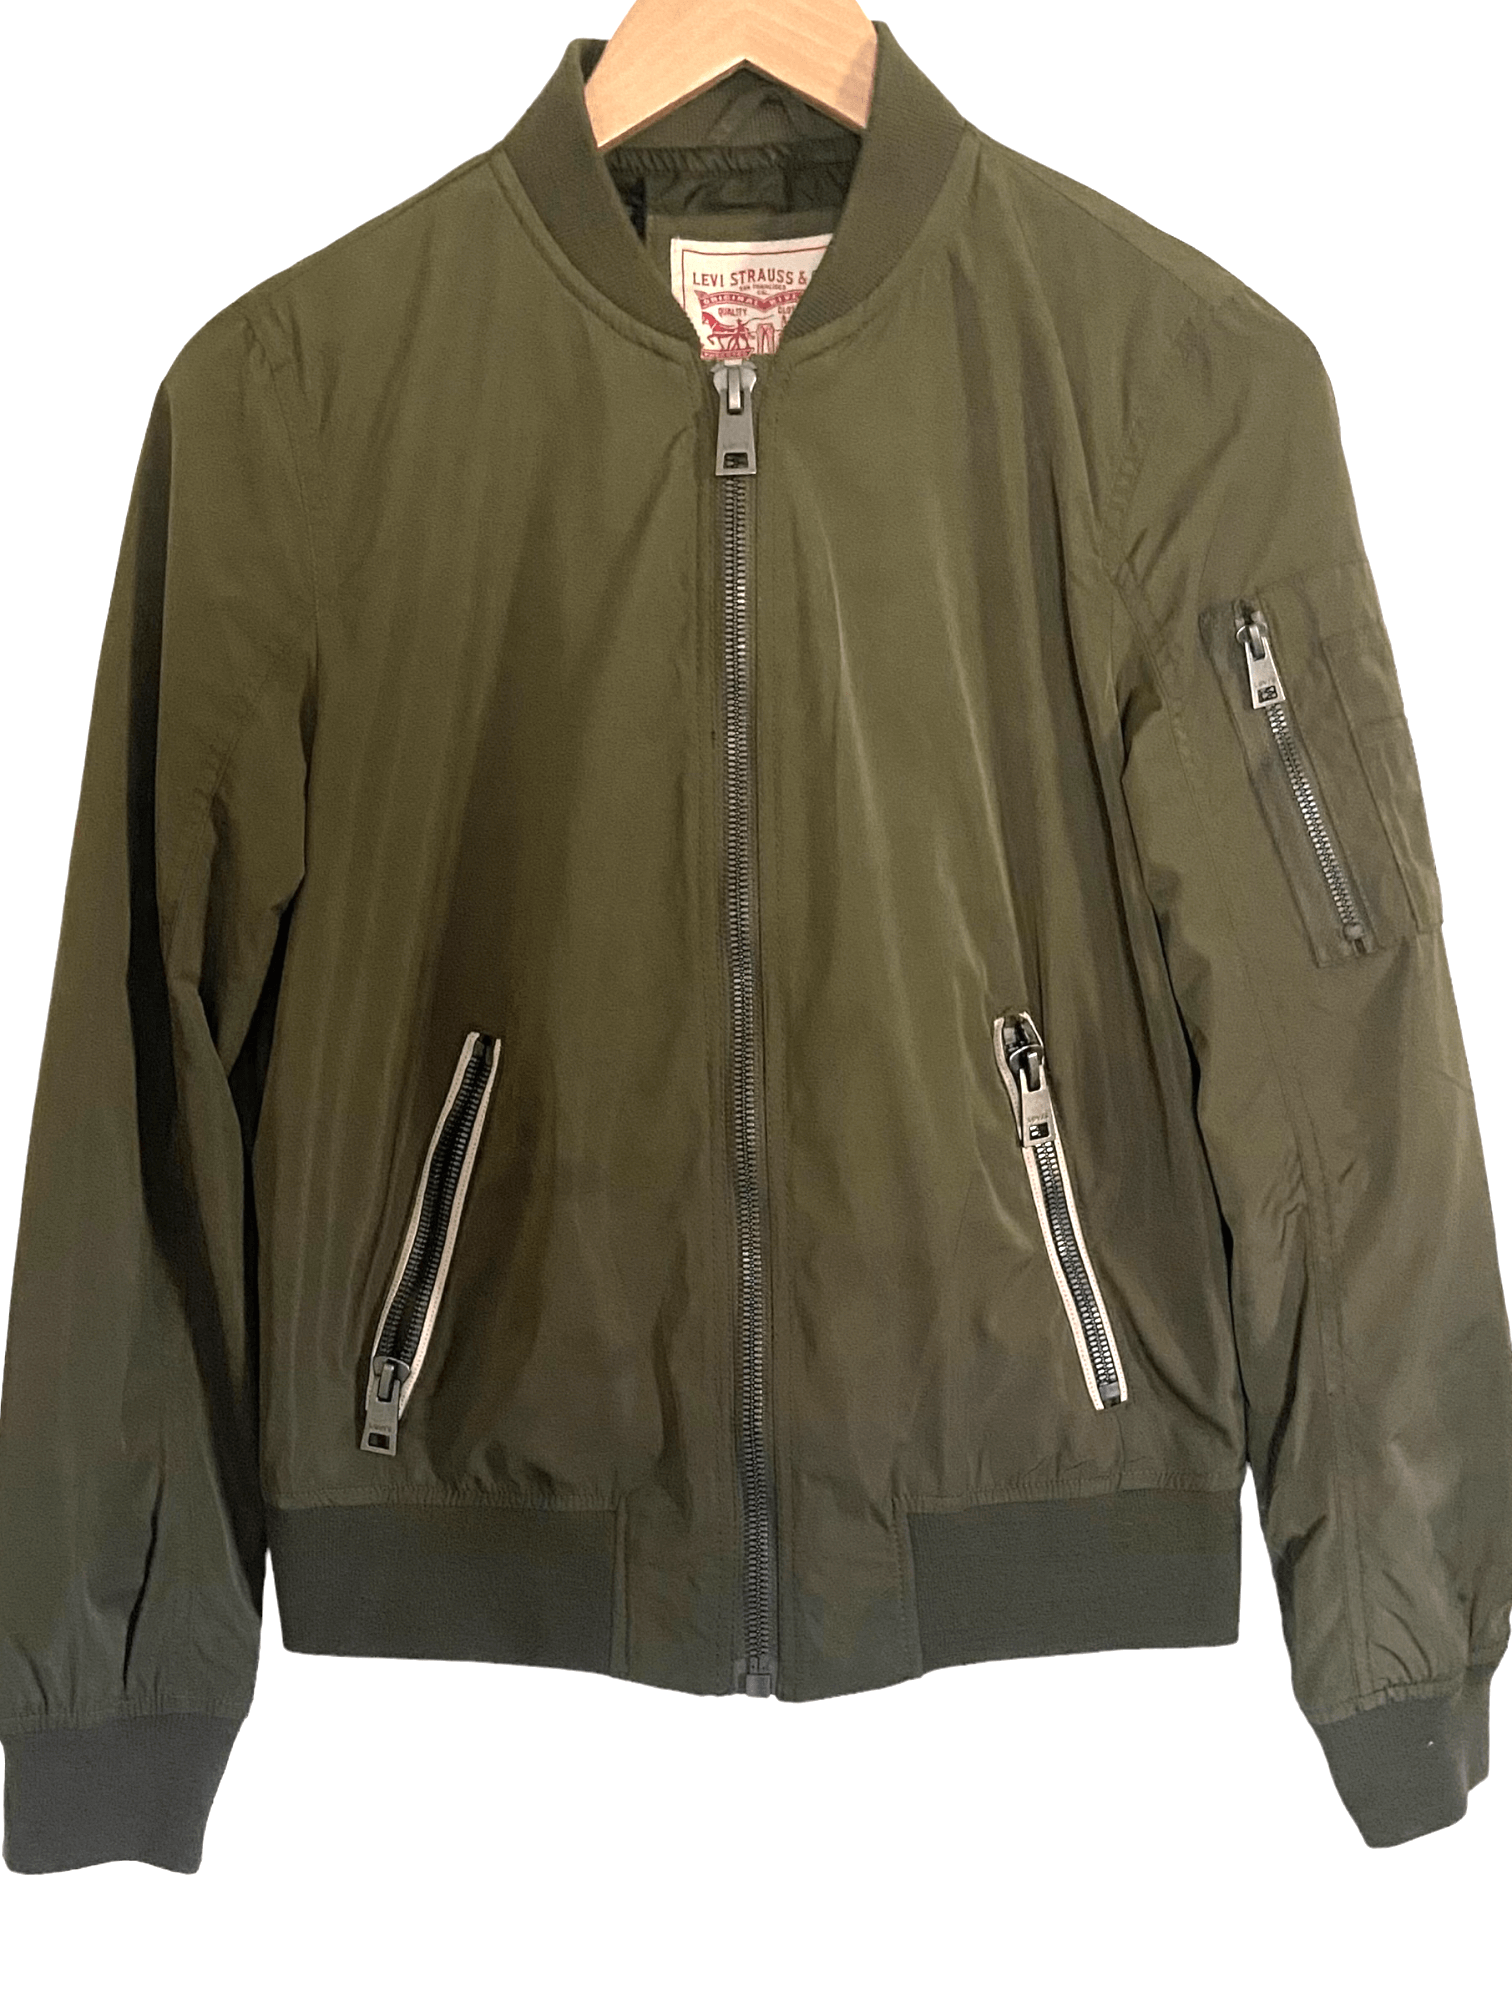 Soft Autumn LEVI STRAUSS CO army green bomber jacket